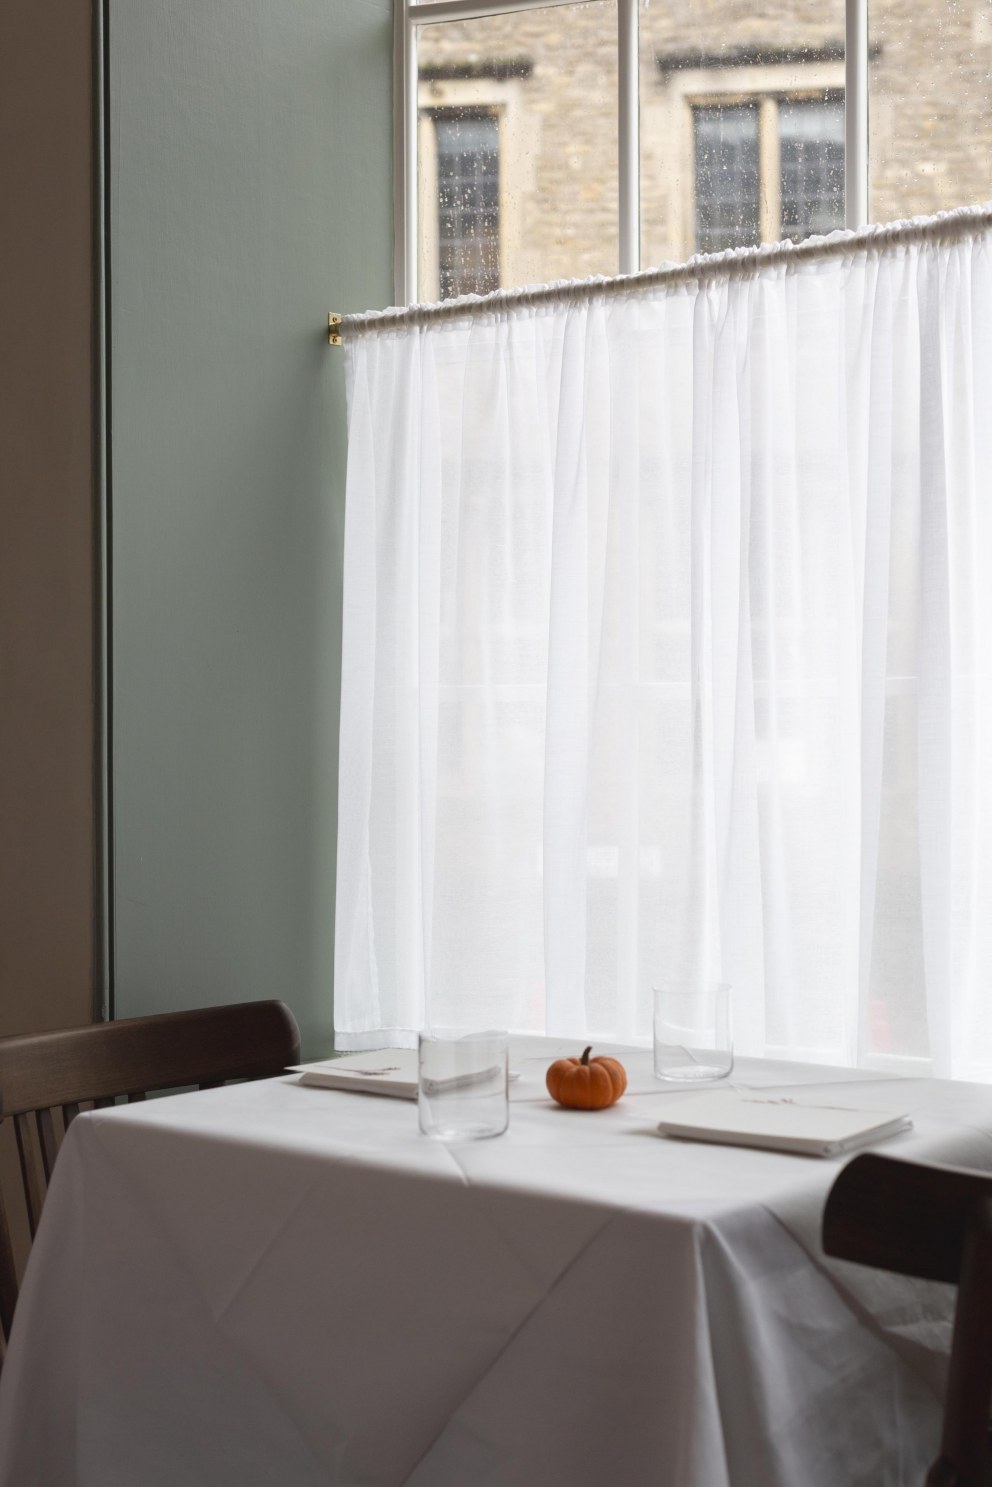 Michelin Starred restaurant | Keeping it simple | Interior Designers